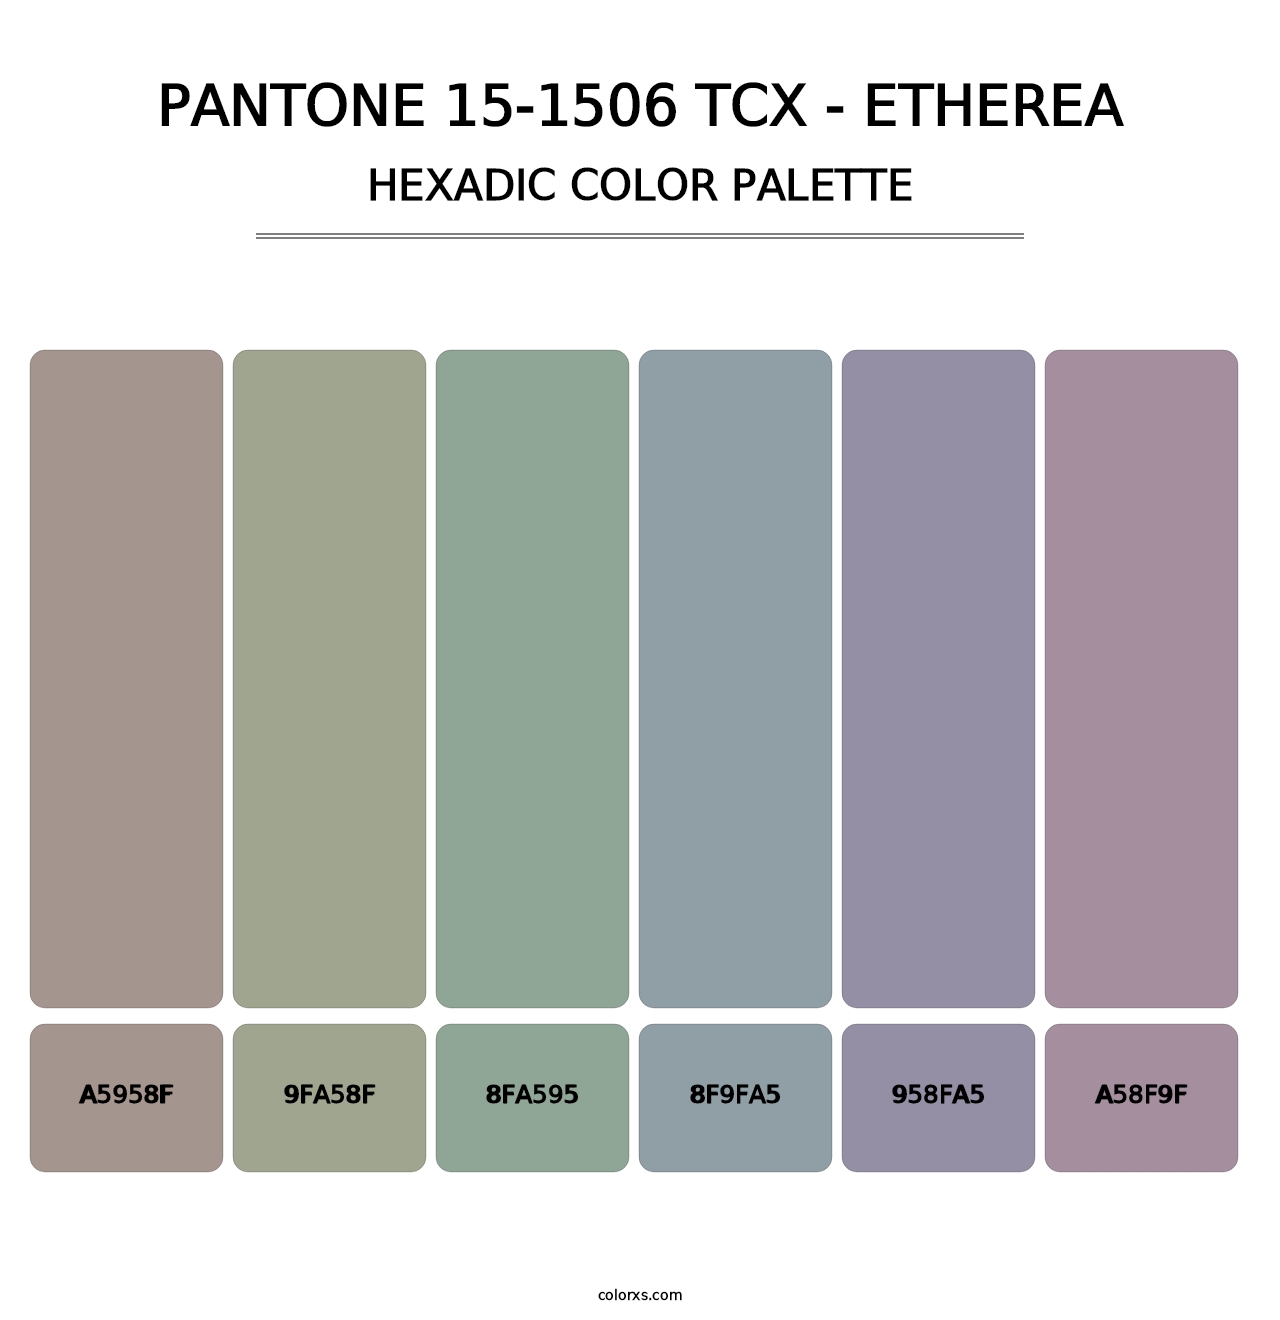 PANTONE 15-1506 TCX - Etherea - Hexadic Color Palette